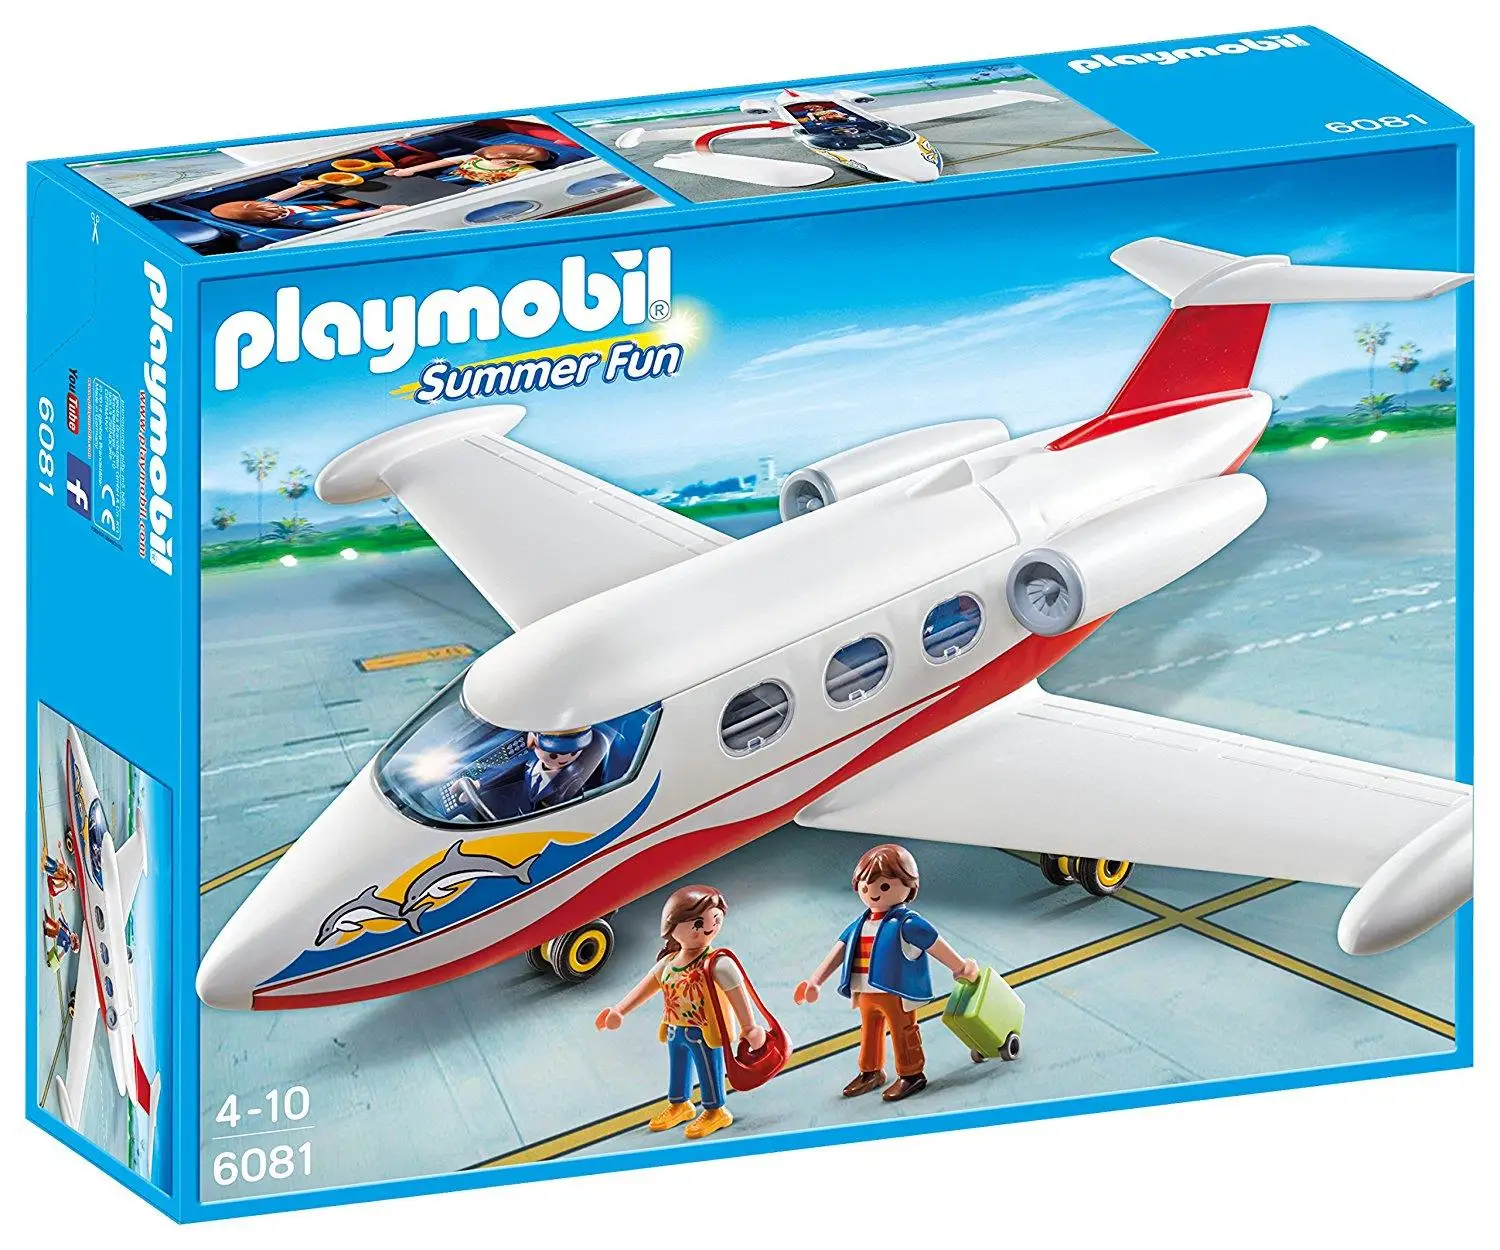 Playmobil 6081 holiday Avion items created Manual